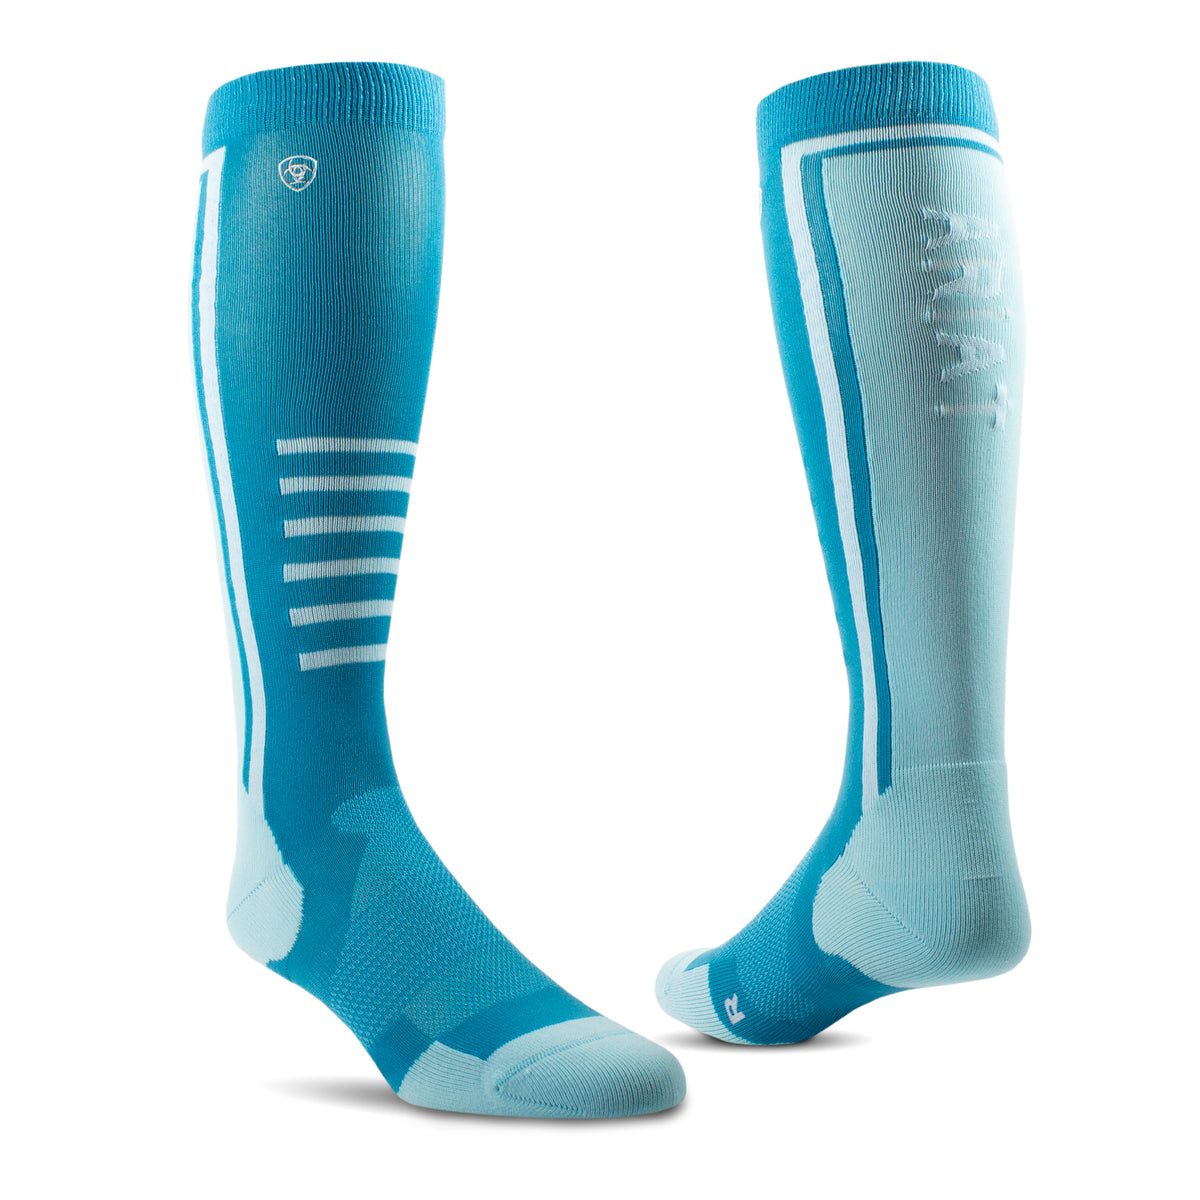 Ariat Uni Ariattek Slimline Performance Socks - Mosaic Blue/Gulf Stream